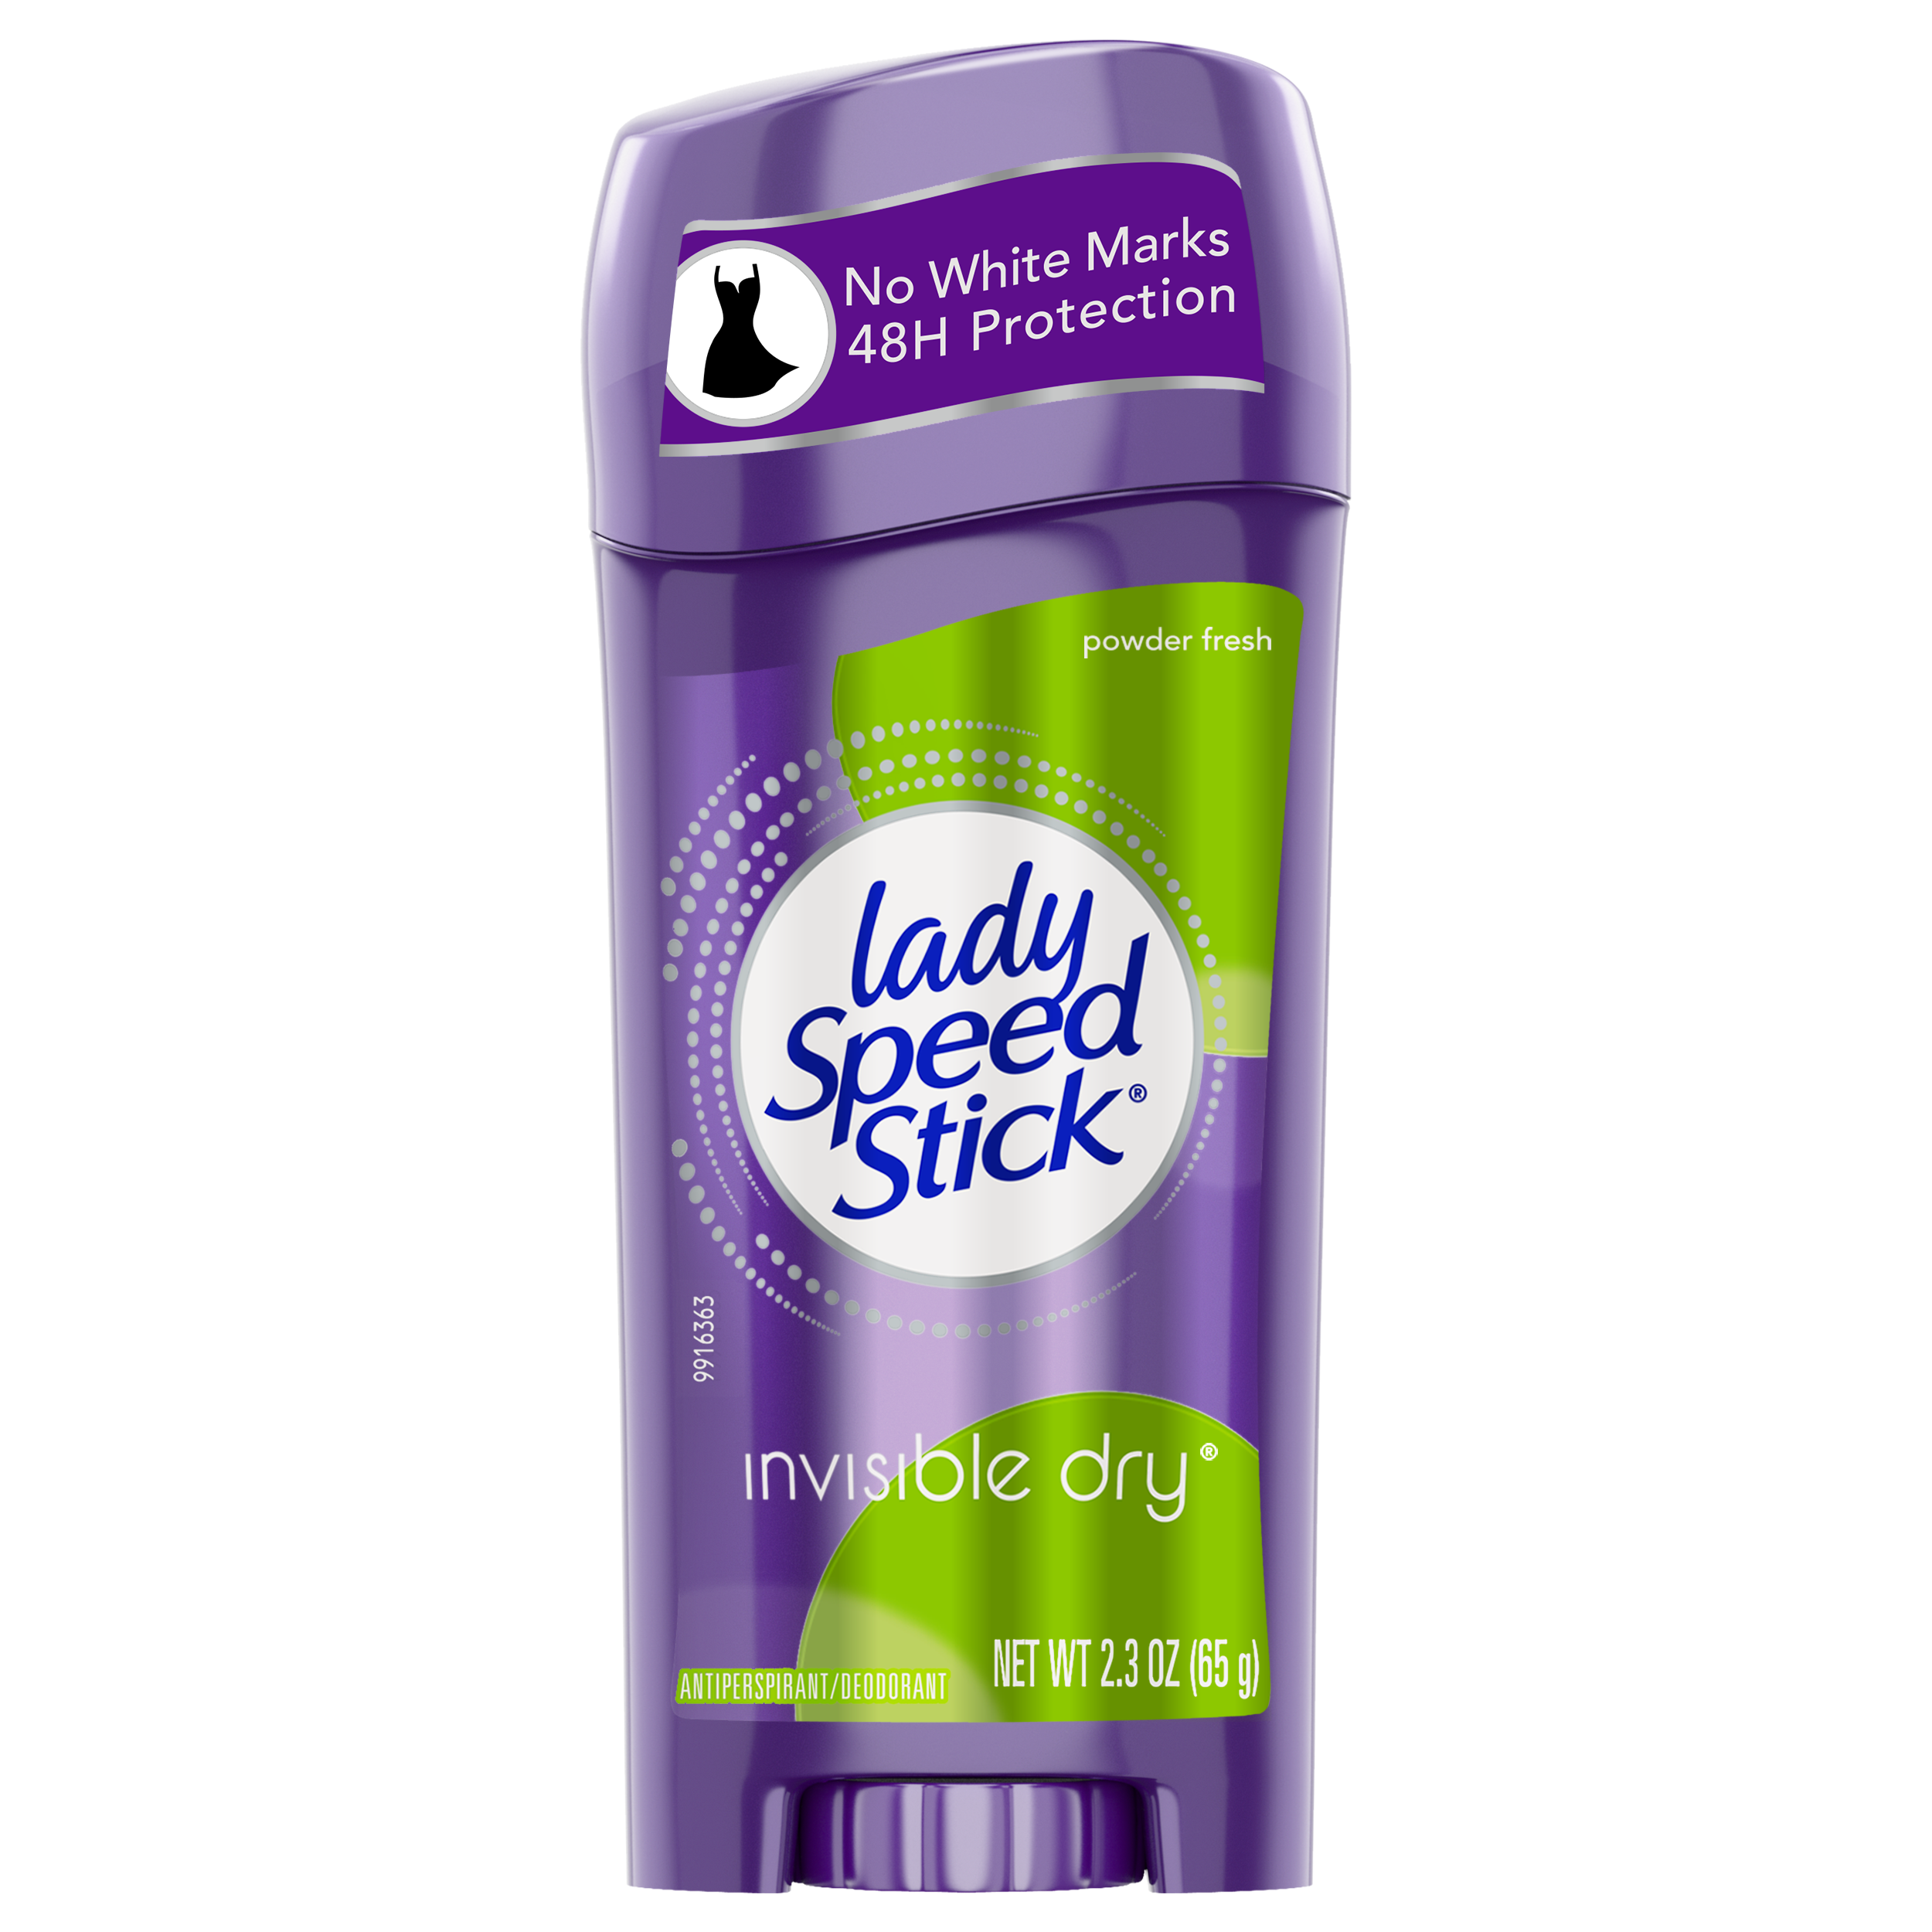 Lady Speed Stick Antiperspirant Deodorant Invisible Dry Powder Fresh, 2.30 oz - image 1 of 4